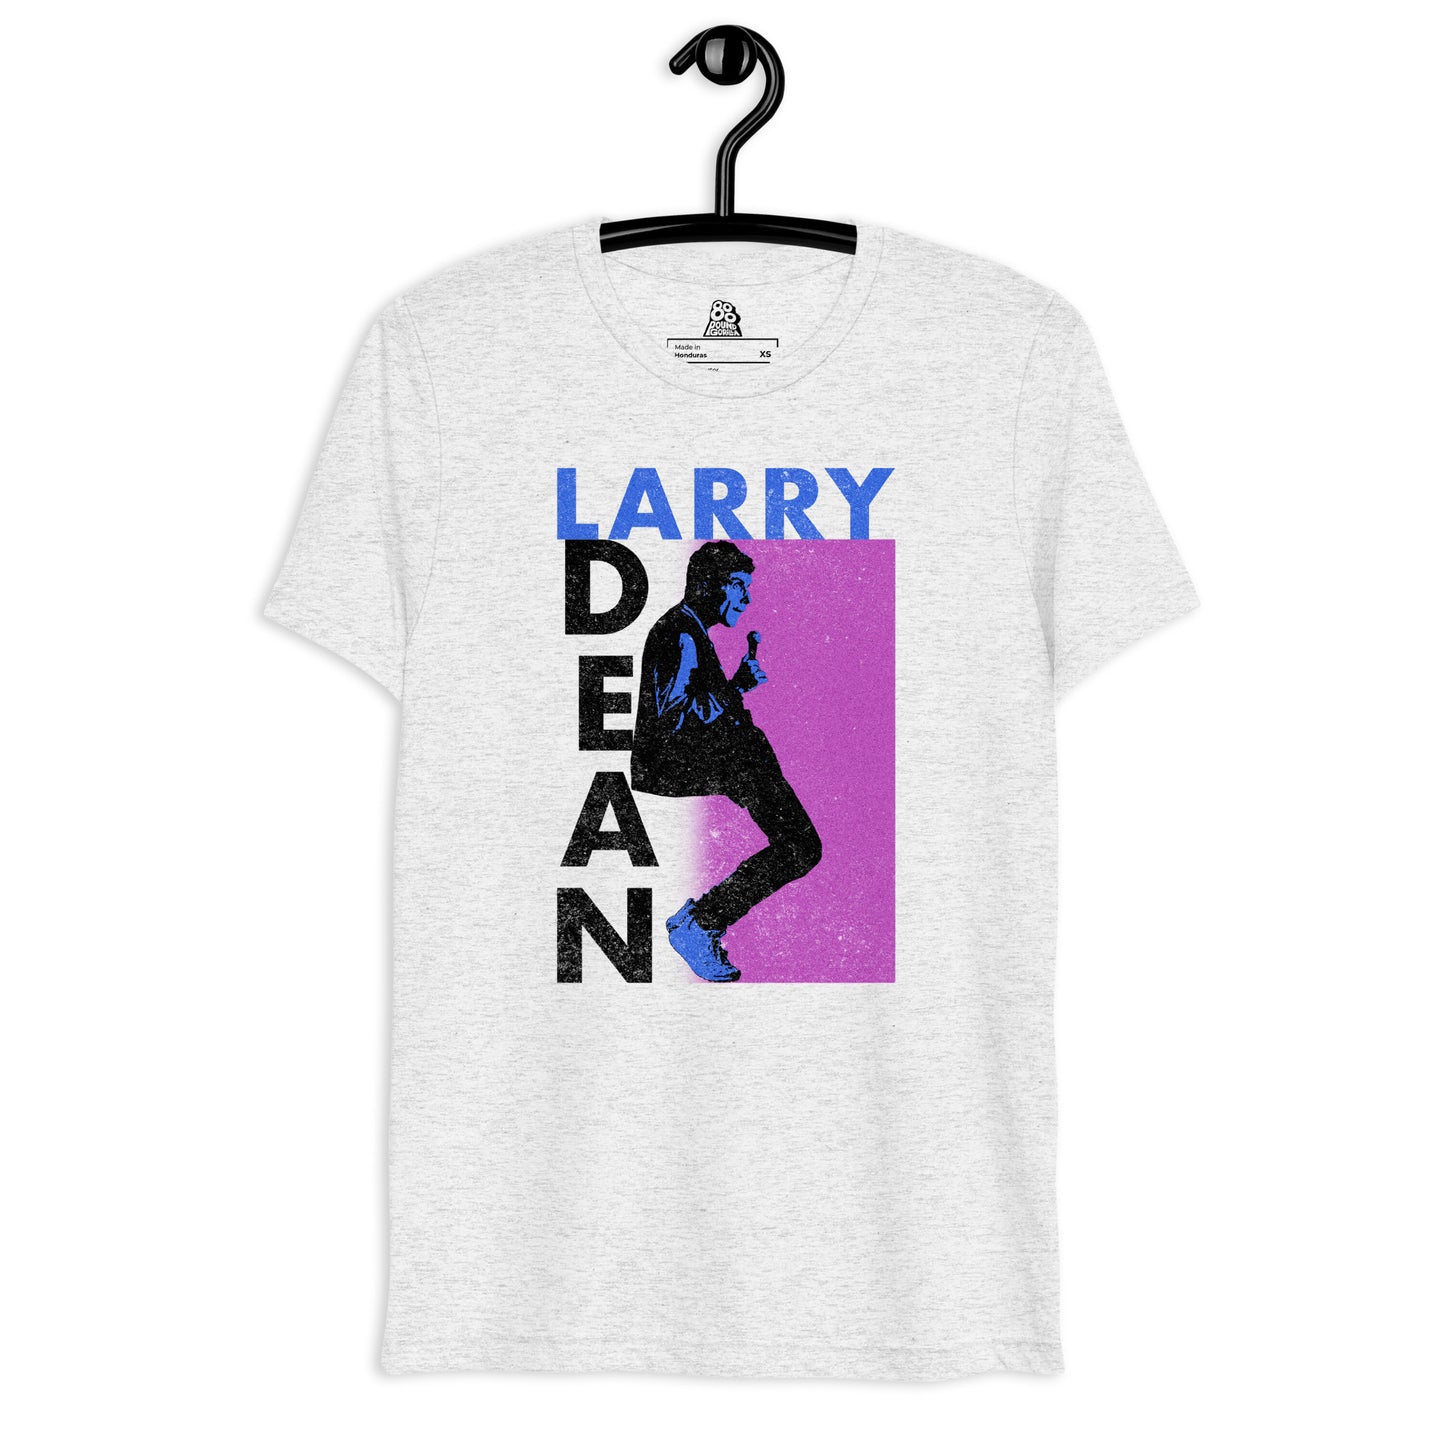 Larry Dean - Pose - Short sleeve t-shirt